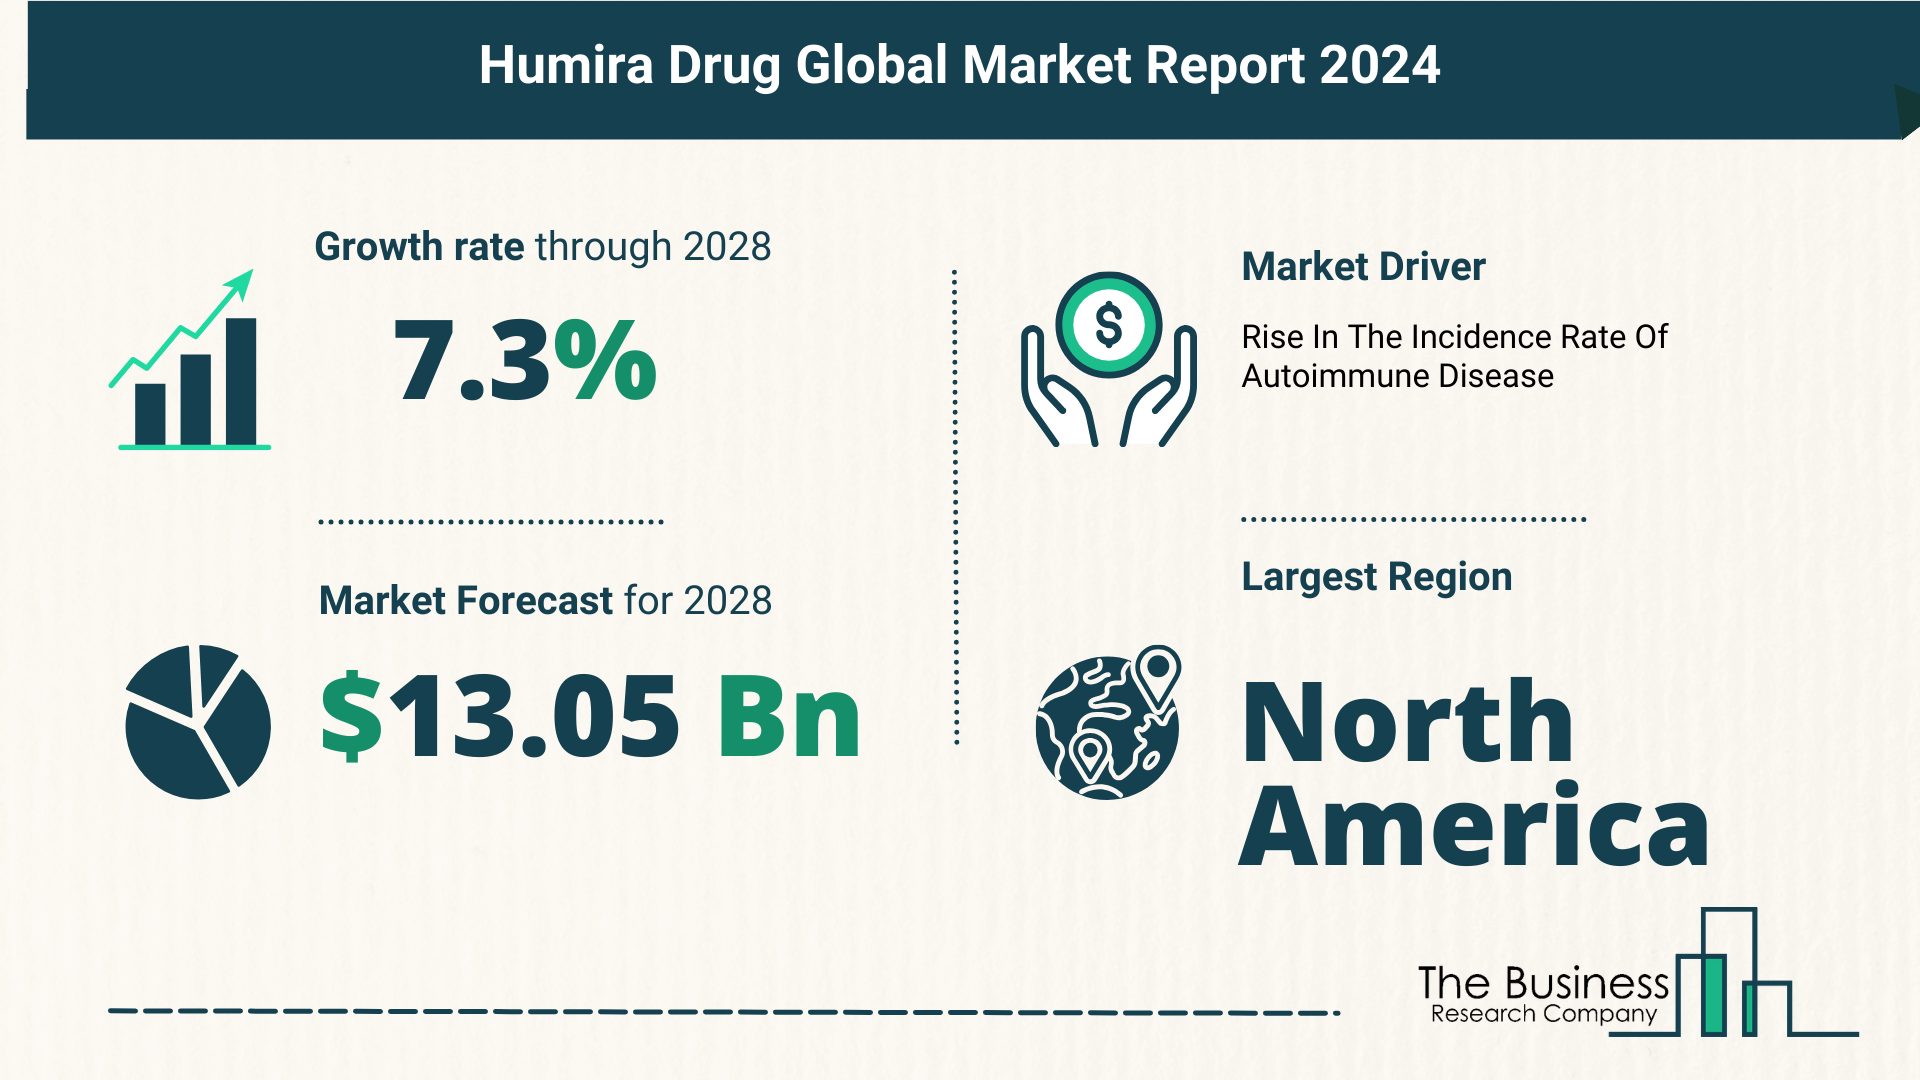 Global Humira Drug Market